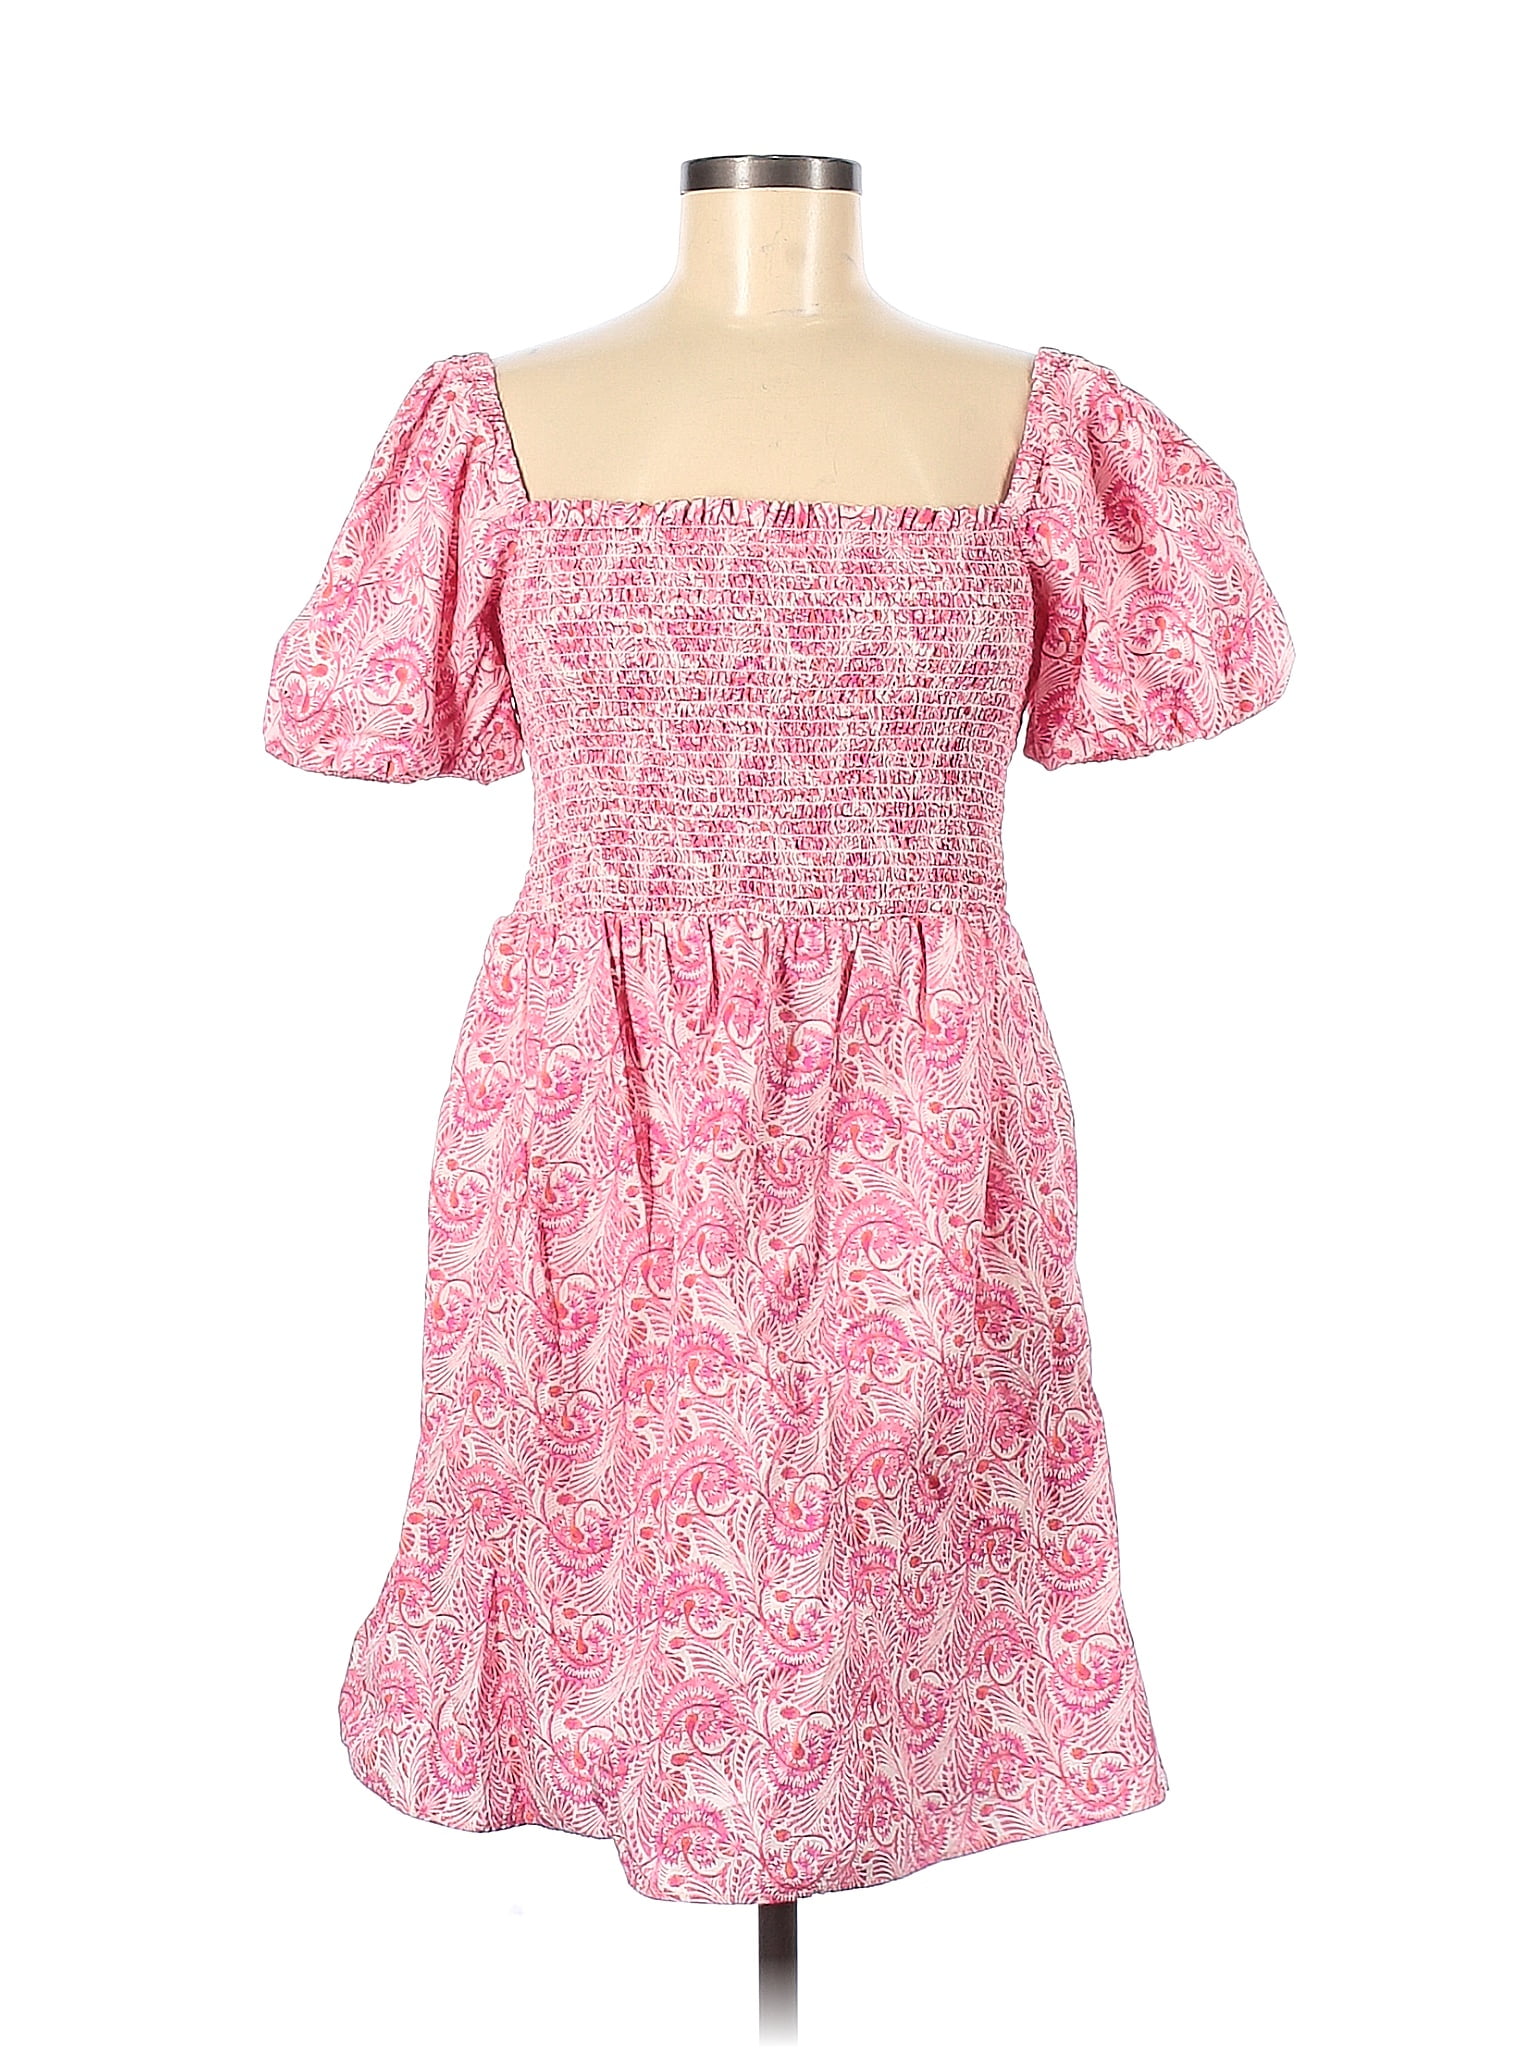 J.Crew 100% Cotton Multi Color Pink Casual Dress Size M - 75% off | thredUP